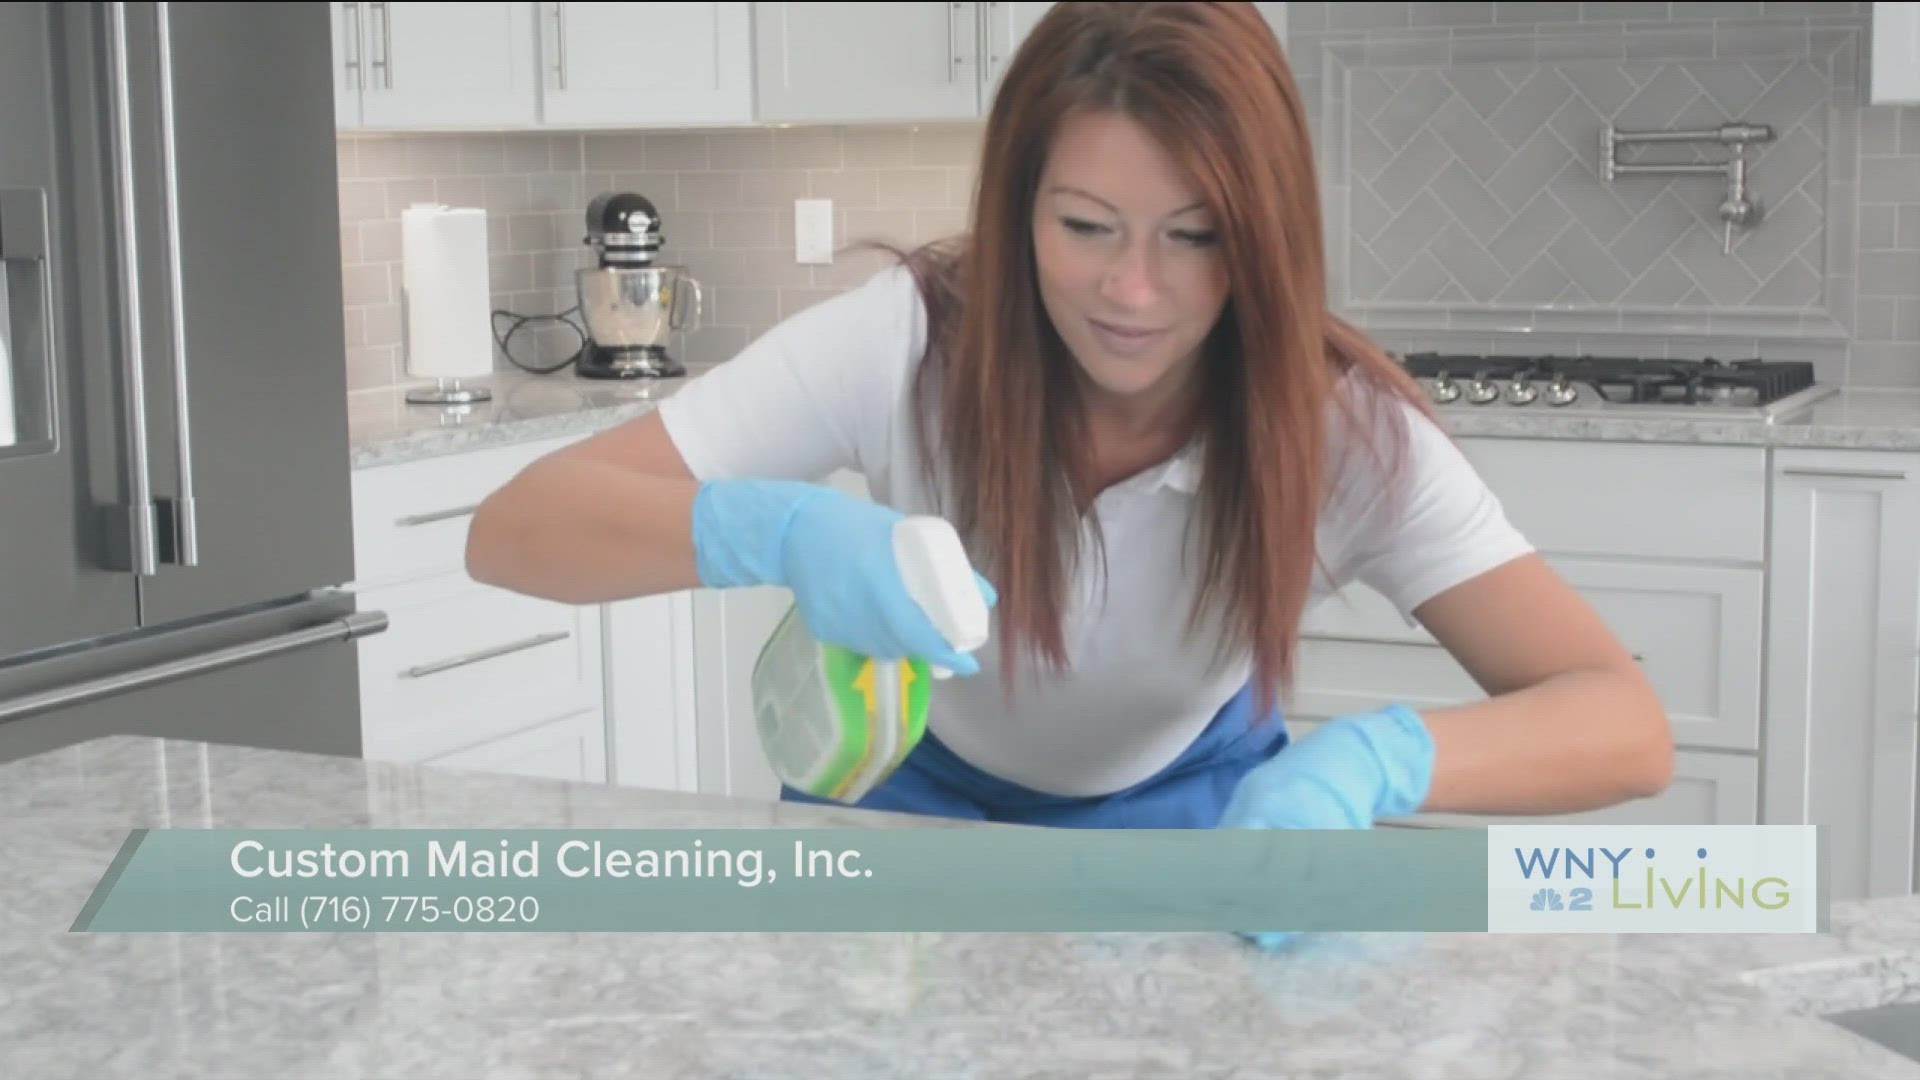 Sat. Nov. 25th - WNY Living - Custom Maid Cleaning (THIS VIDEO IS SPONSORED BY CUSTOM MAID CLEANING)